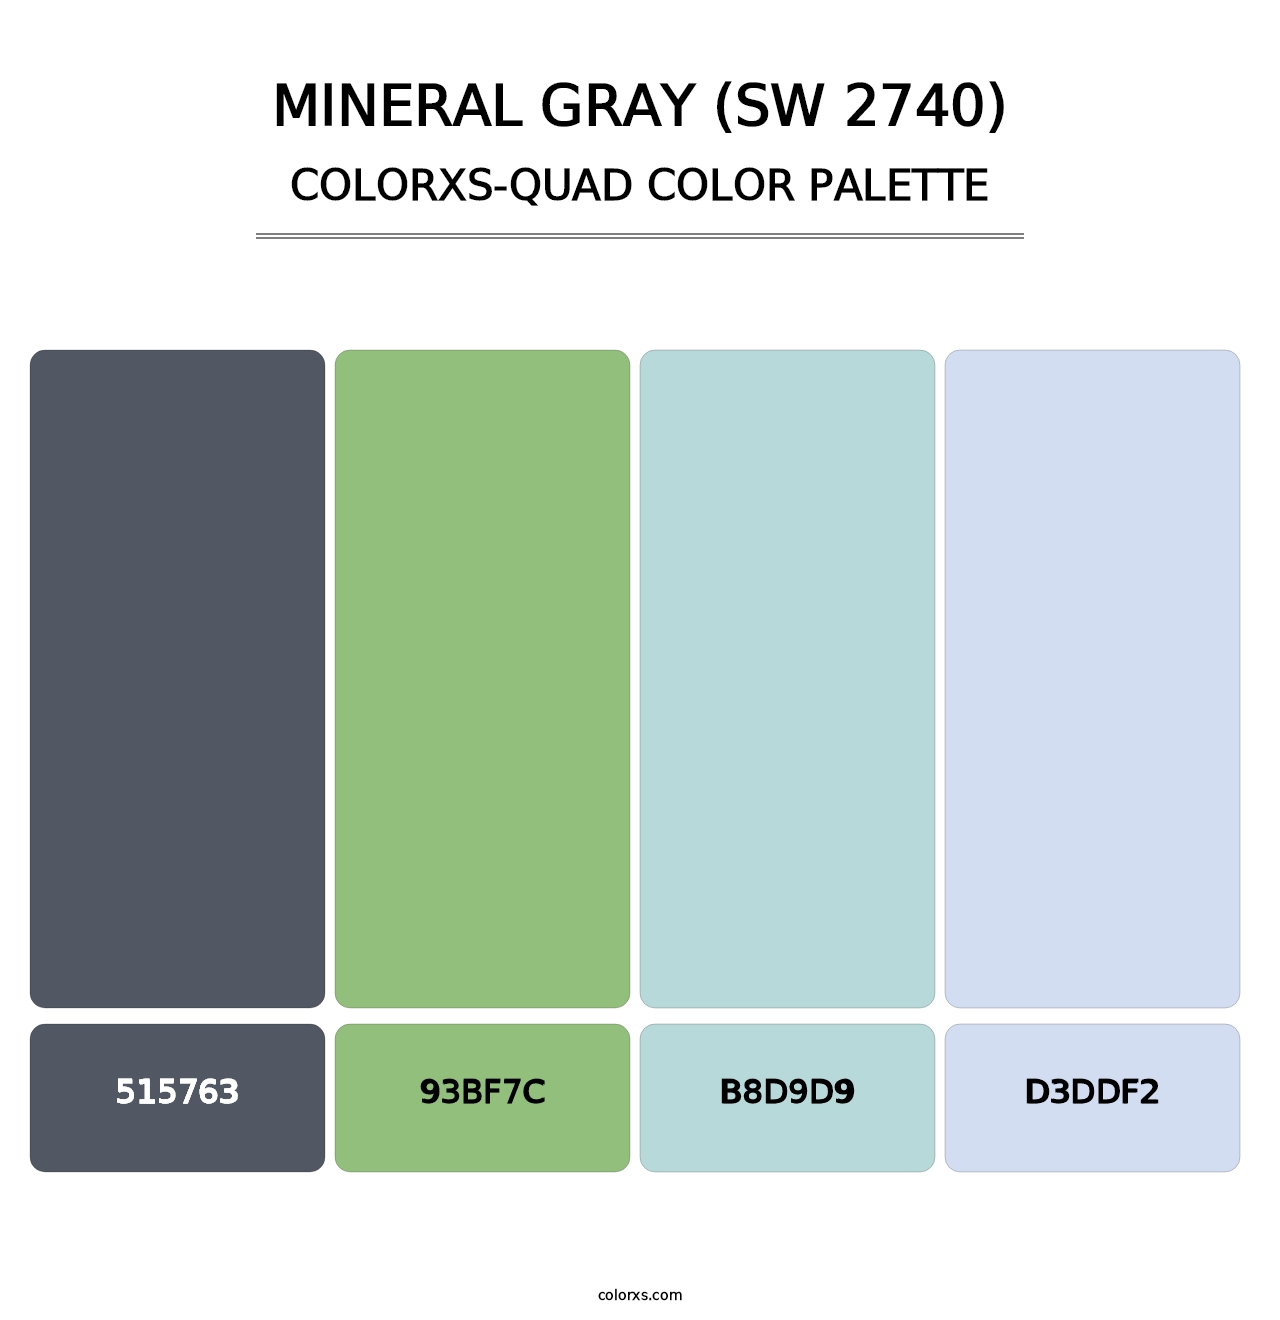 Mineral Gray (SW 2740) - Colorxs Quad Palette